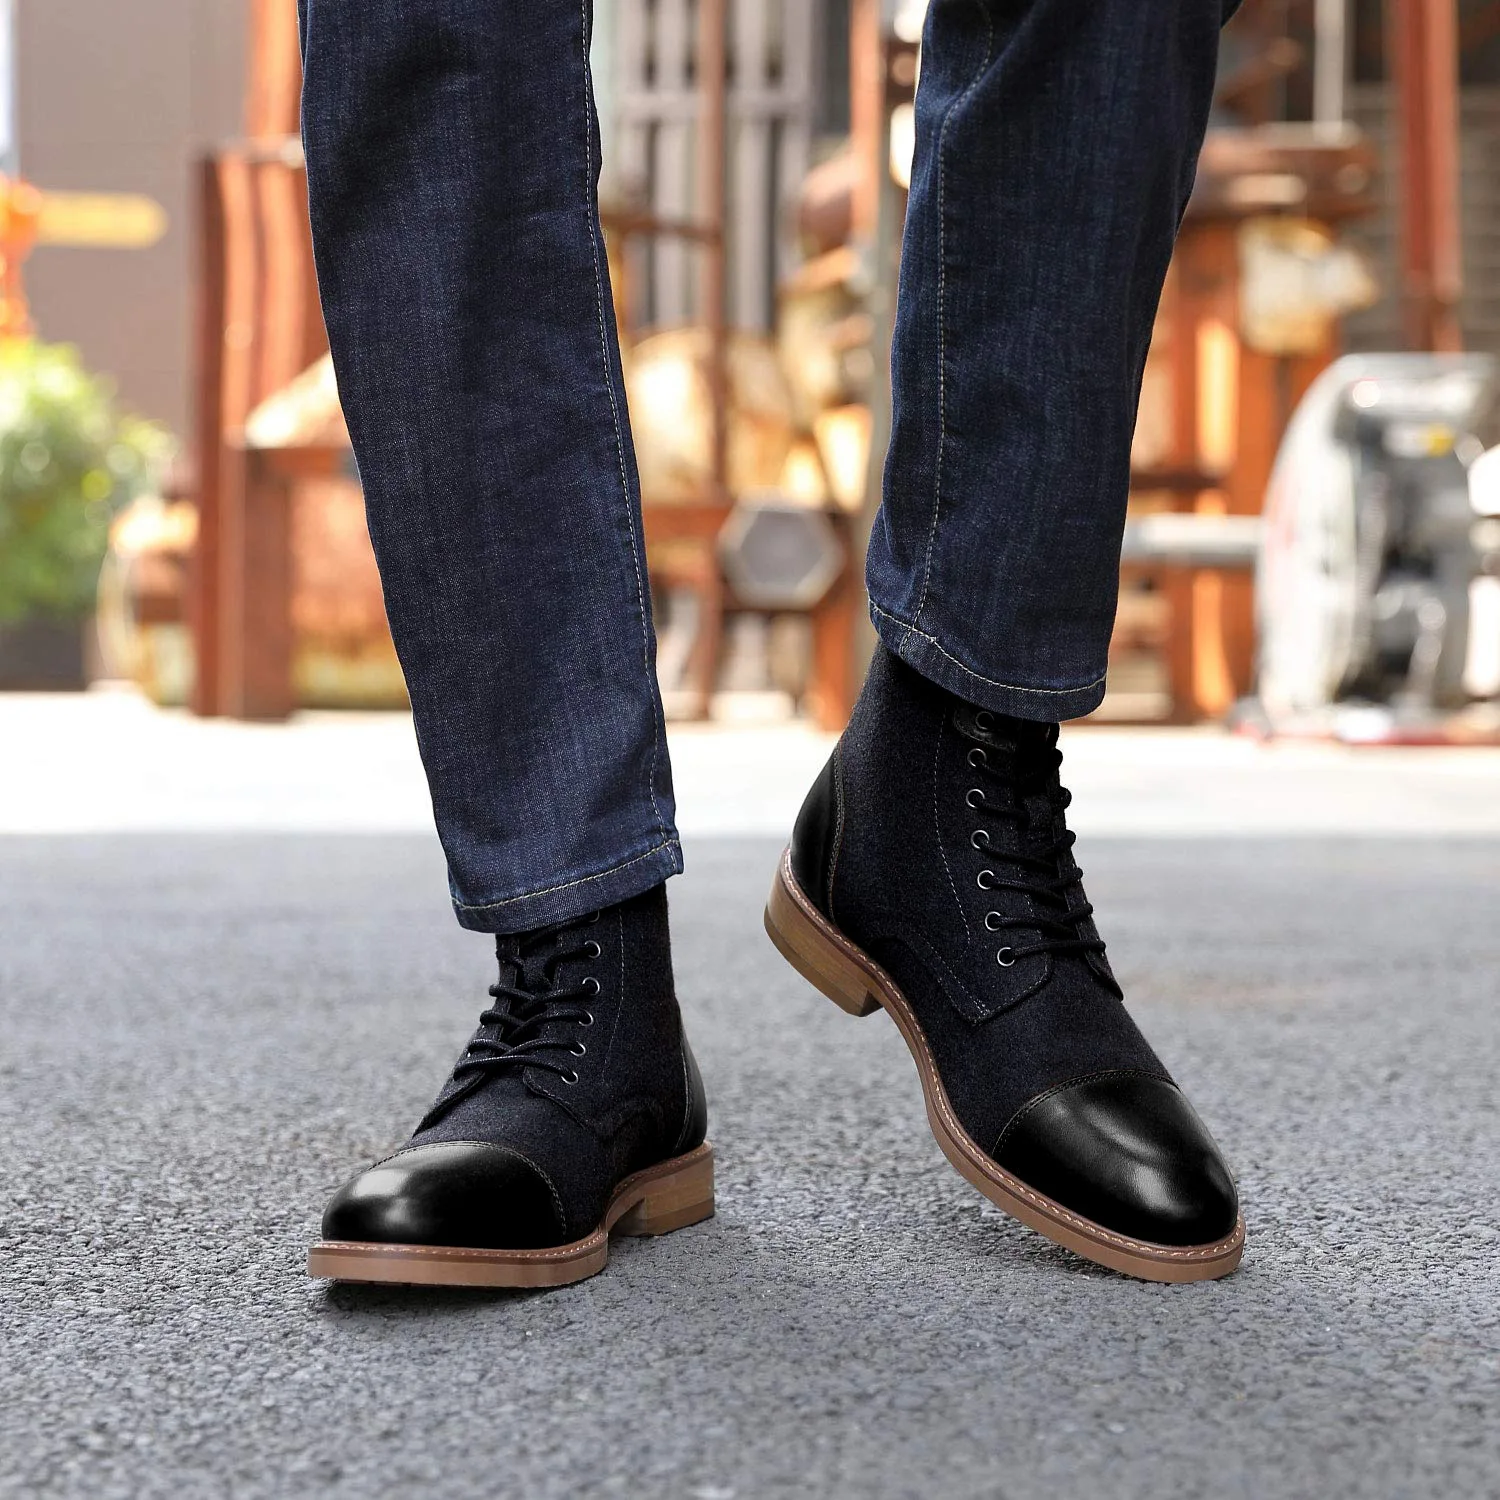 

Comfortable Fashion Boots For Men Decent Chaussures-Homm Cheap Shoes For Men Business Official Men Boots